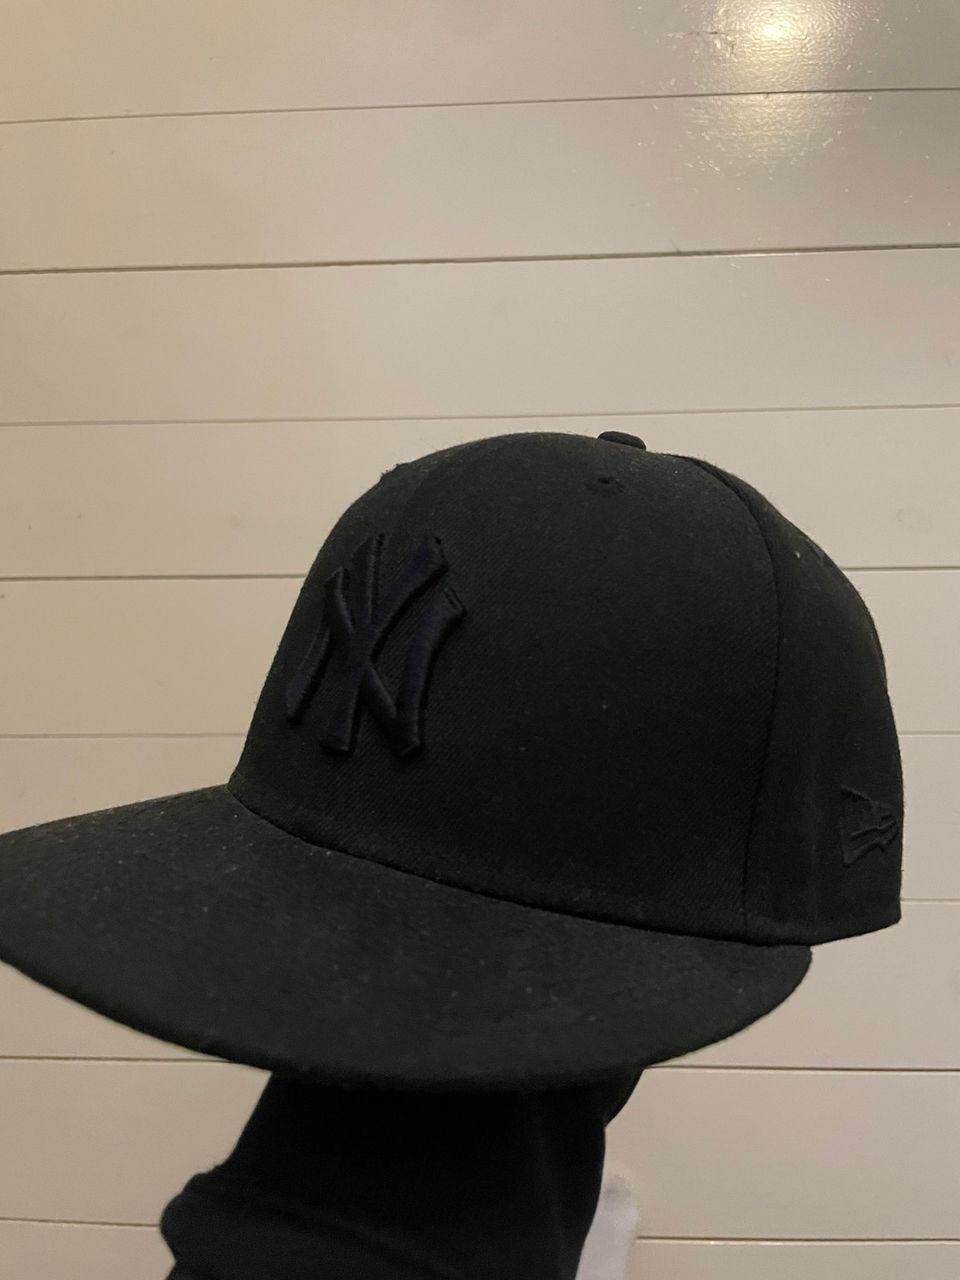 New Era fitted cap